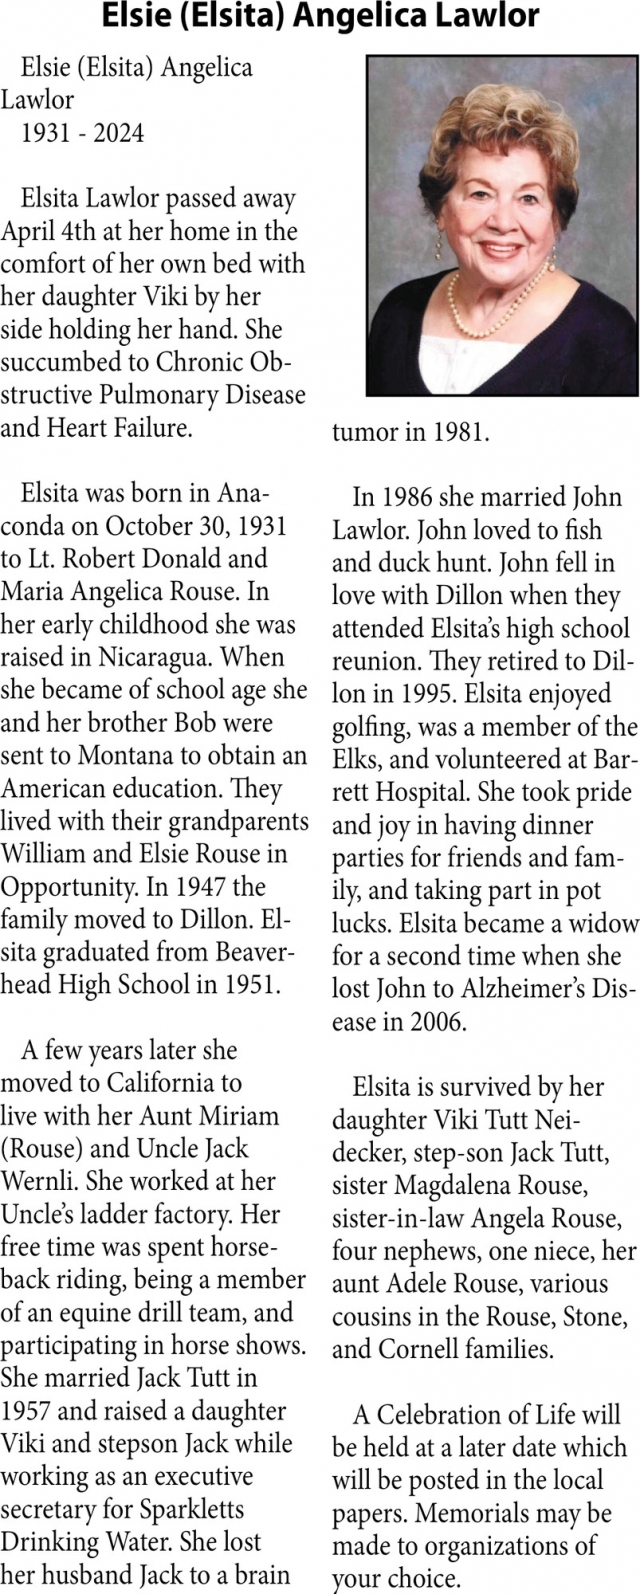 Elsie (Elsita) Angelica Lawlor, Obituaries, Glendive, MT